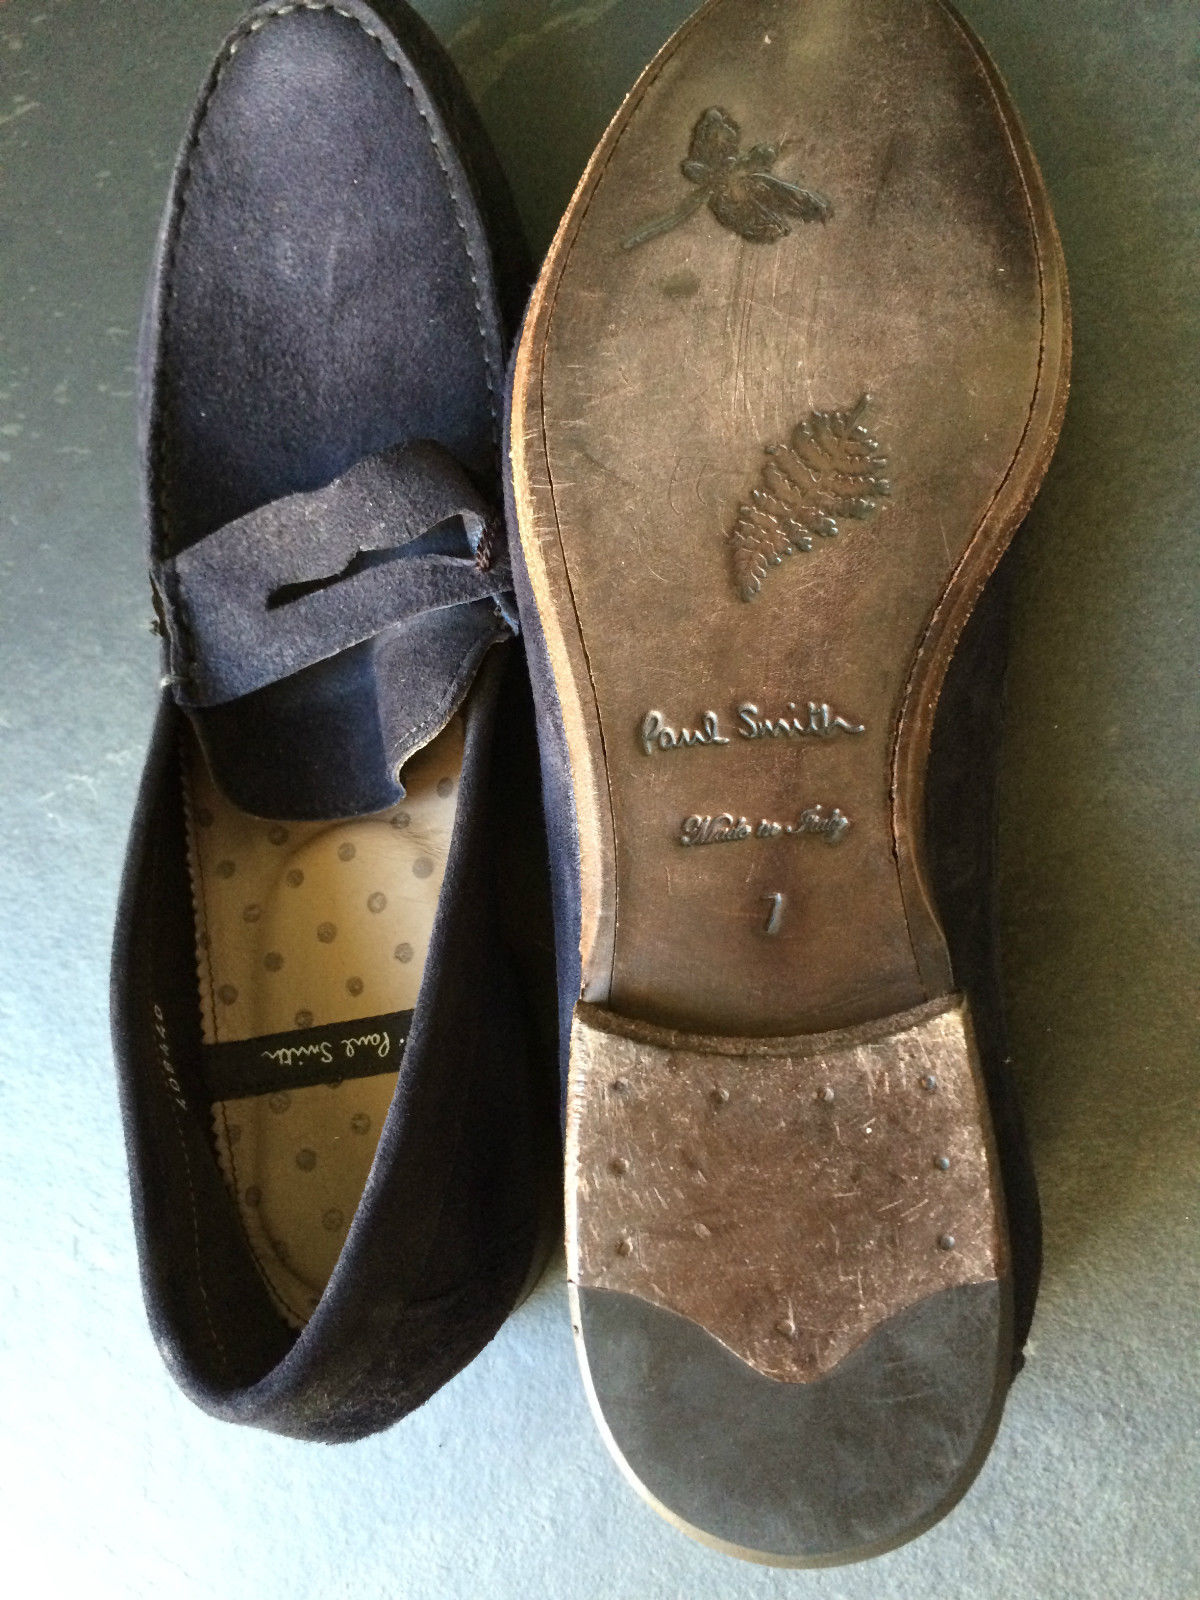 NEW Mens Paul Smith MANCINI Blue suede Loafer Shoes UK 7 EU 41 | eBay